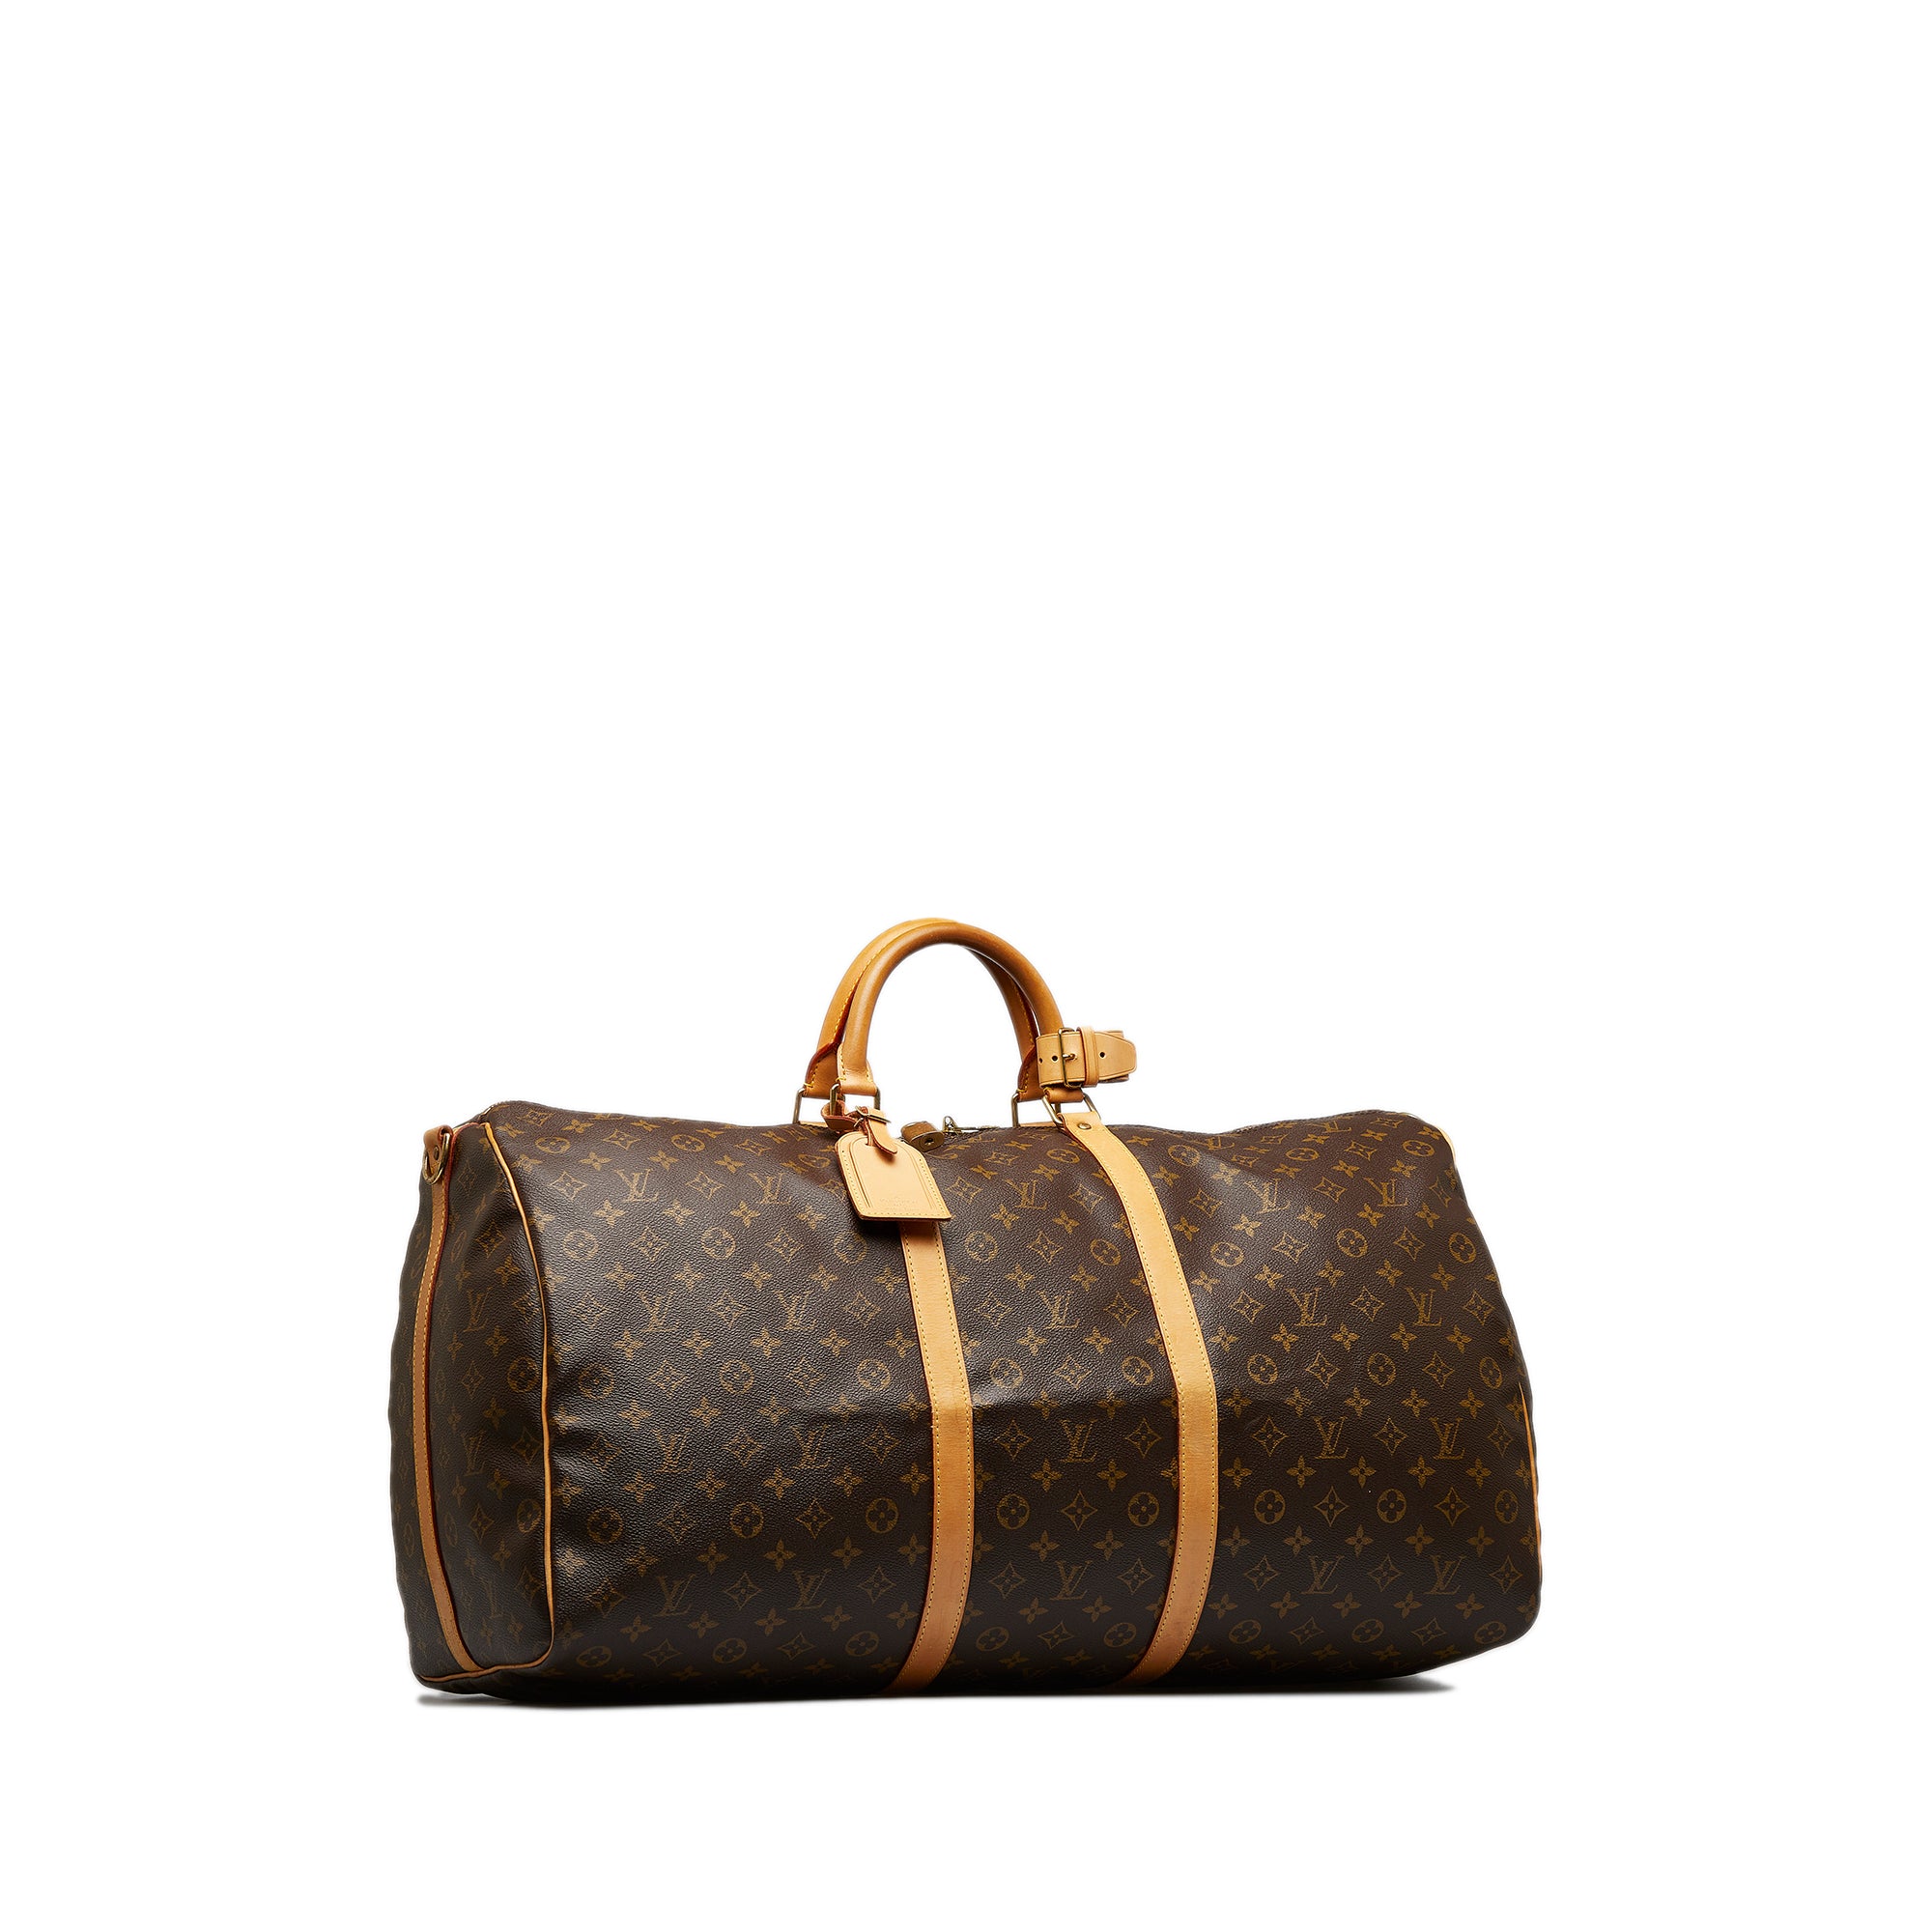 Louis Vuitton Keepall Bandouliere Handbag